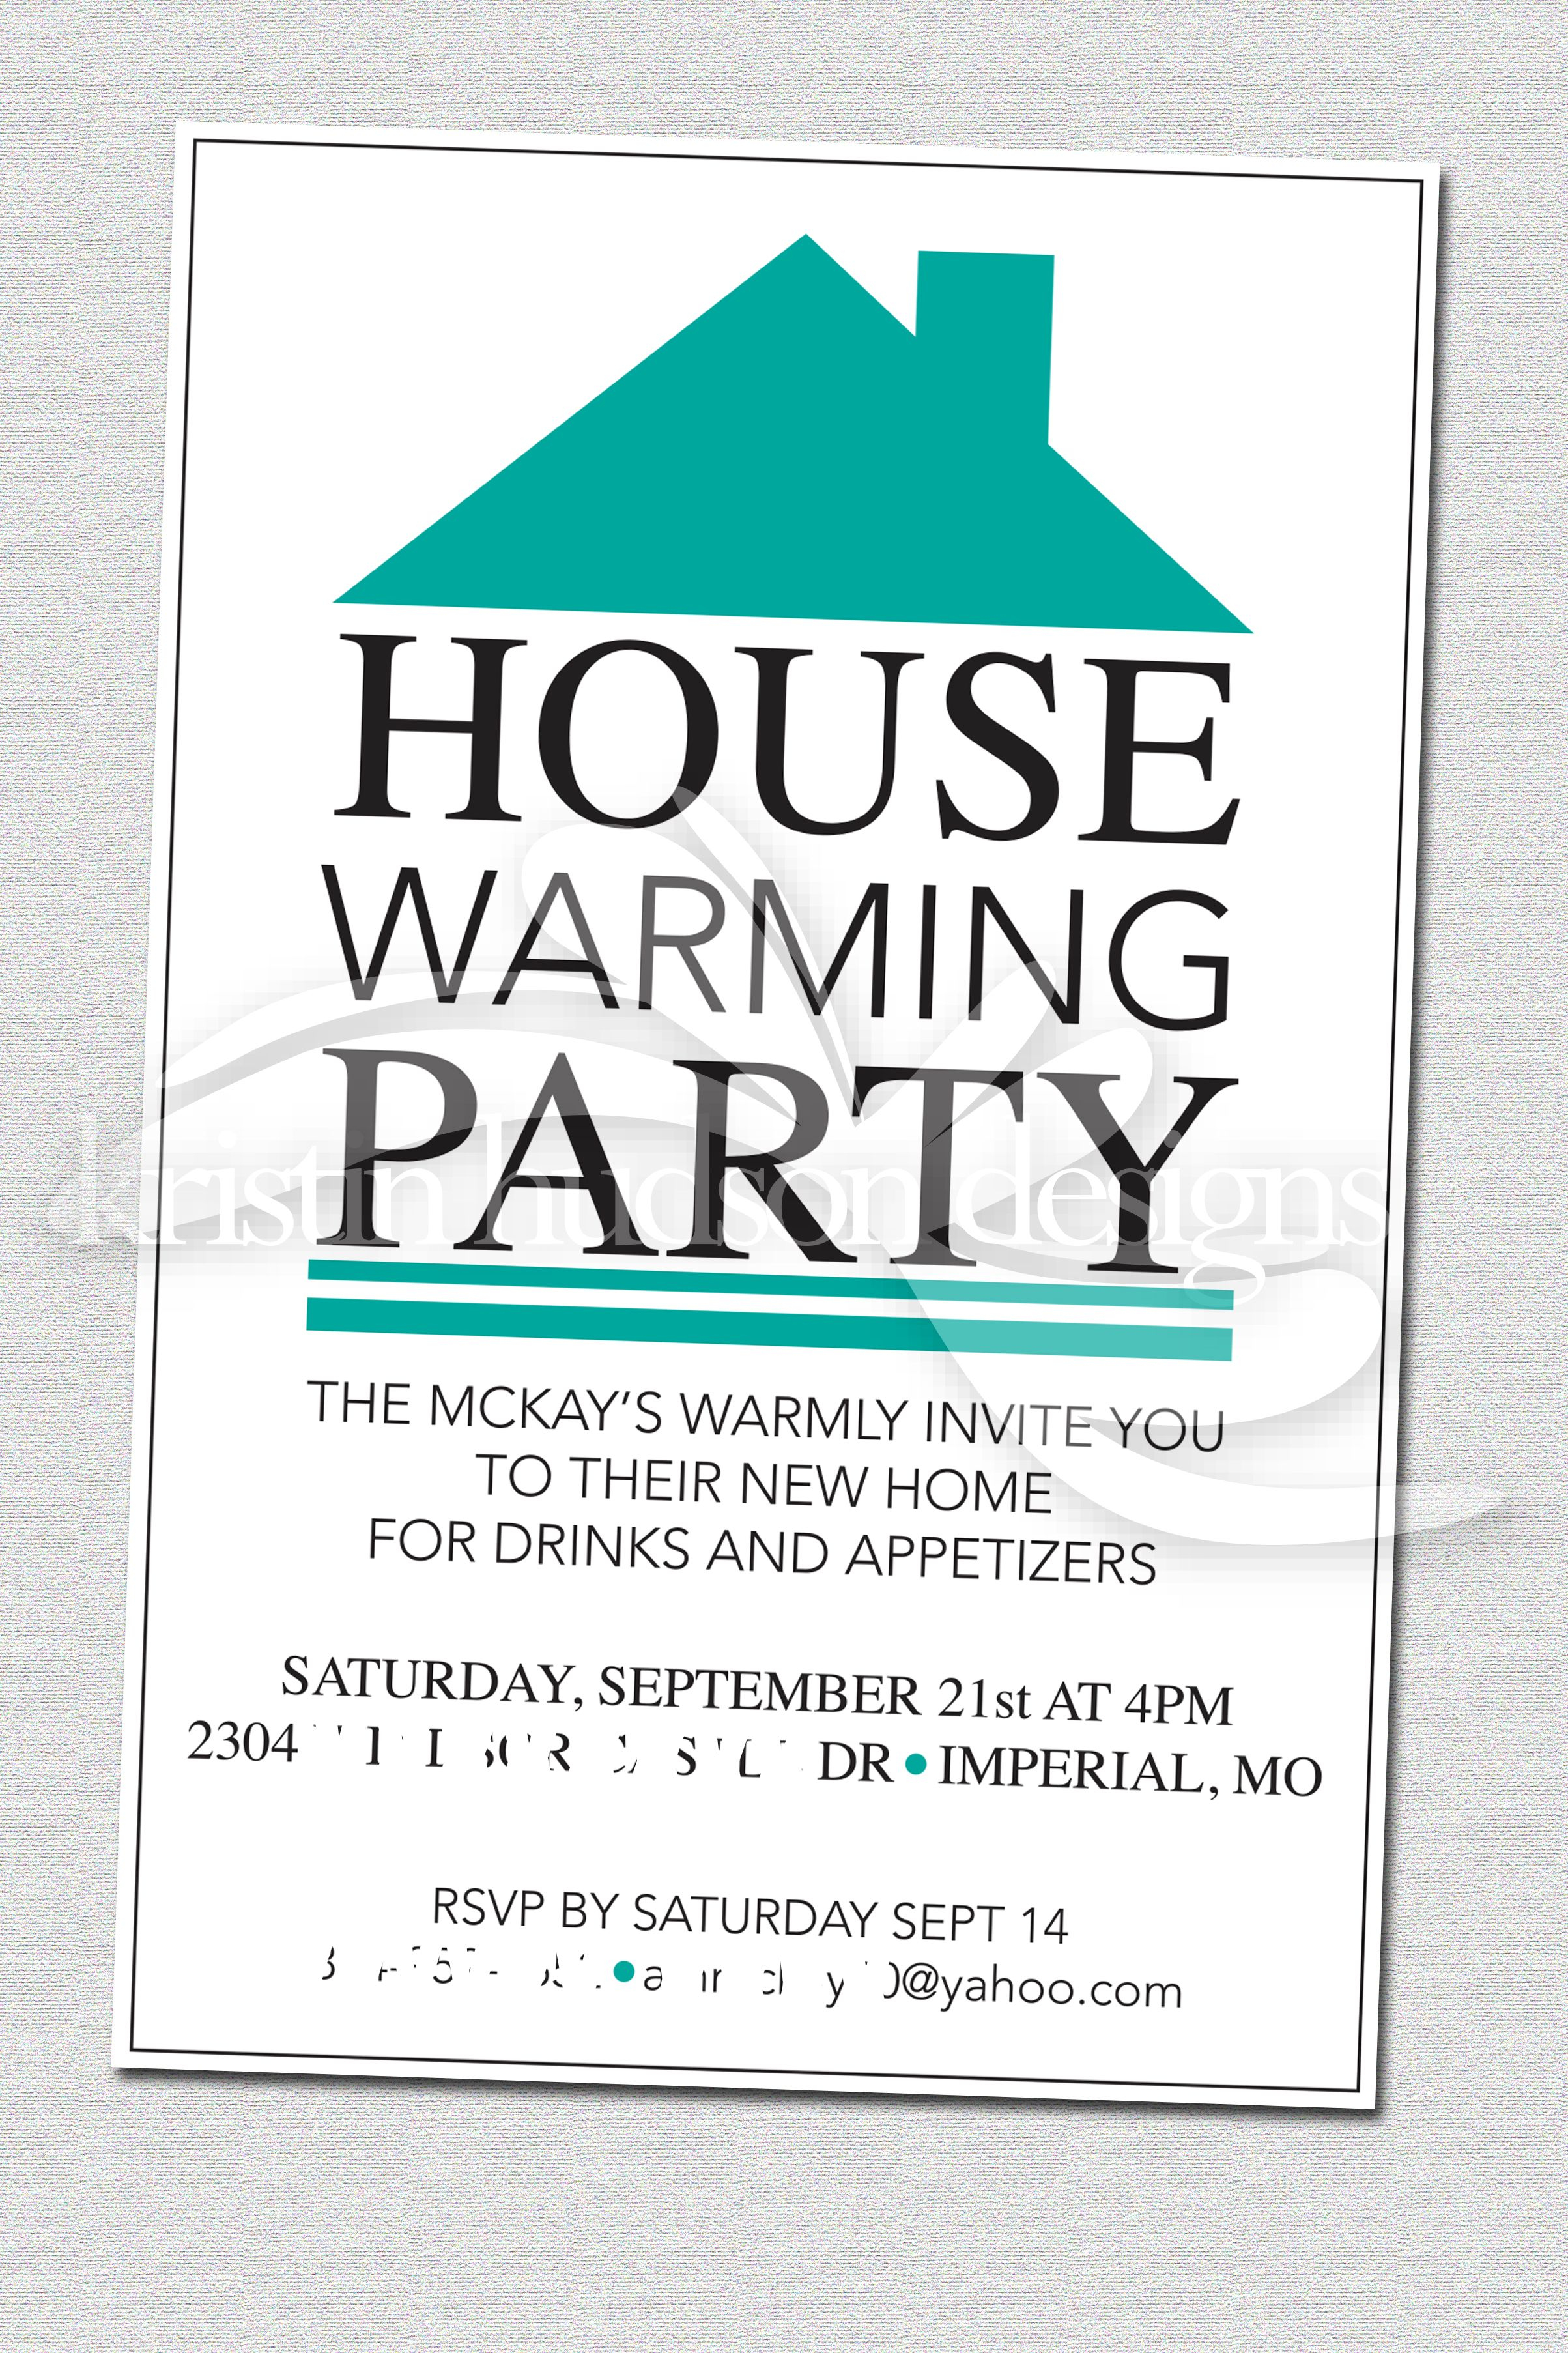 House Warming Party Invite Designs Kristin Hudson Invitations regarding dimensions 2407 X 3611